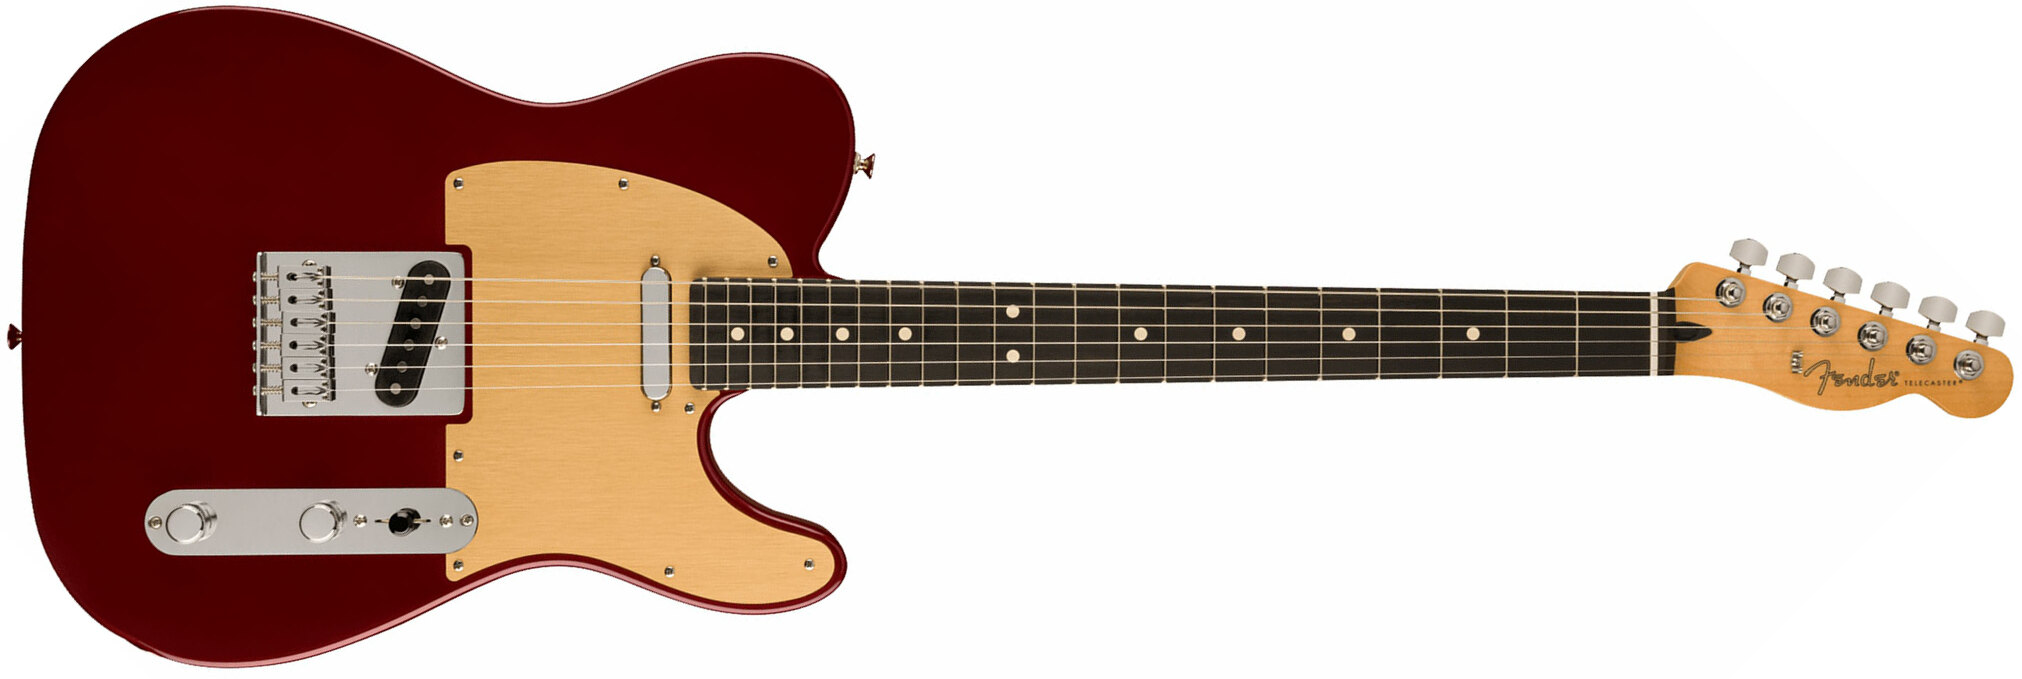 Fender Tele Player Ltd Mex 2s Pure Vintage Ht Eb - Oxblood - Televorm elektrische gitaar - Main picture